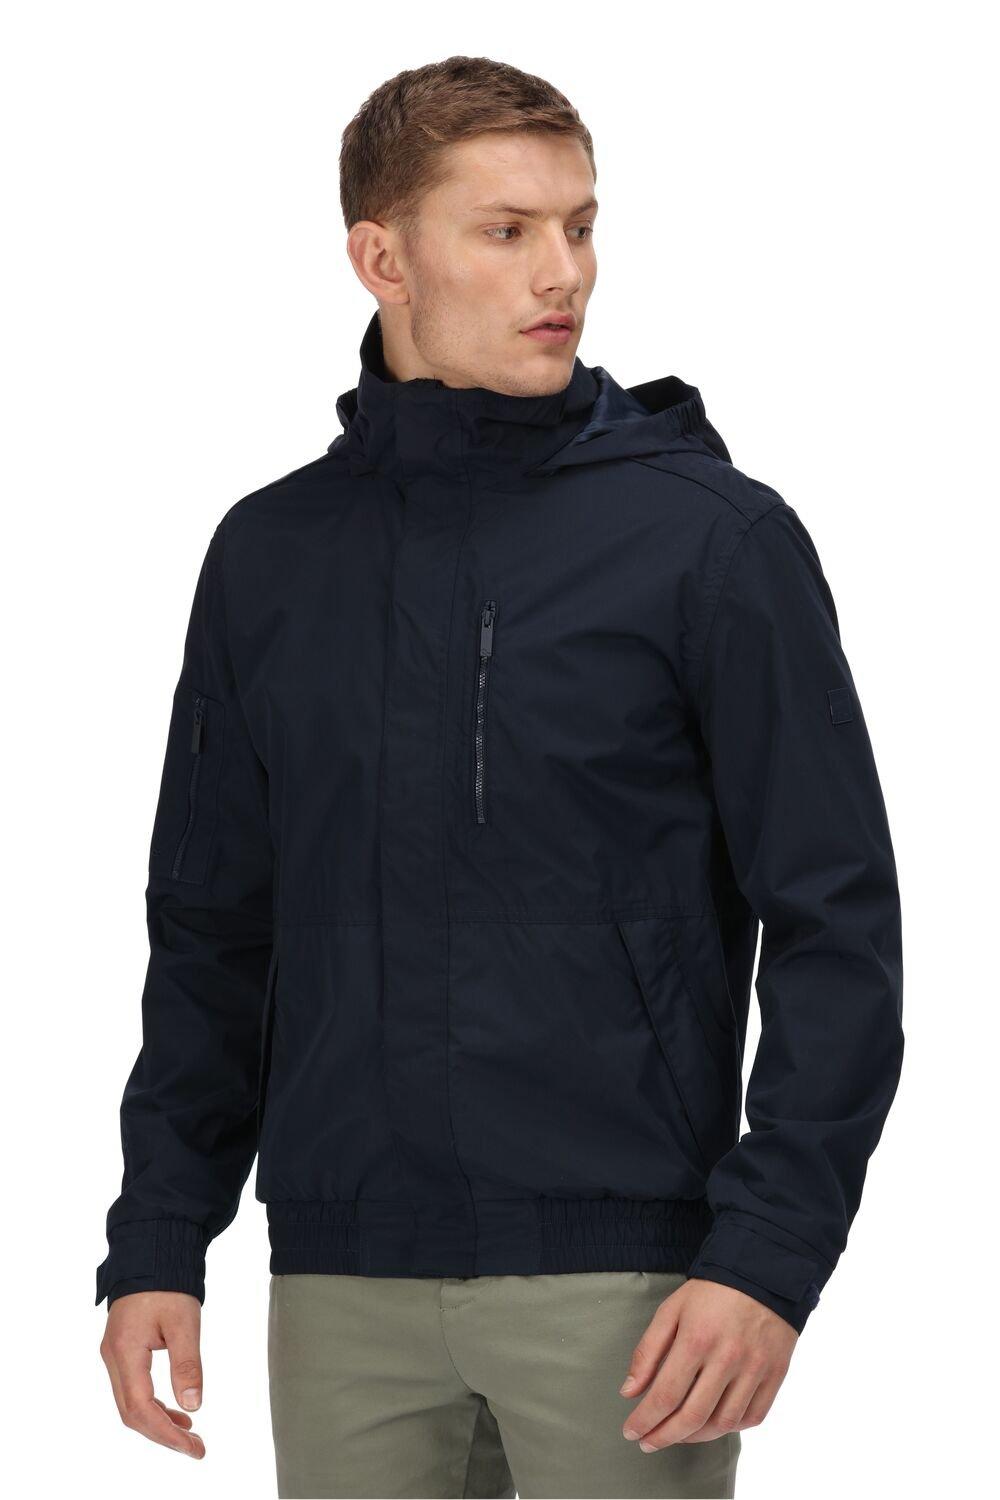 Men's Sports Jackets & Coats | Burton